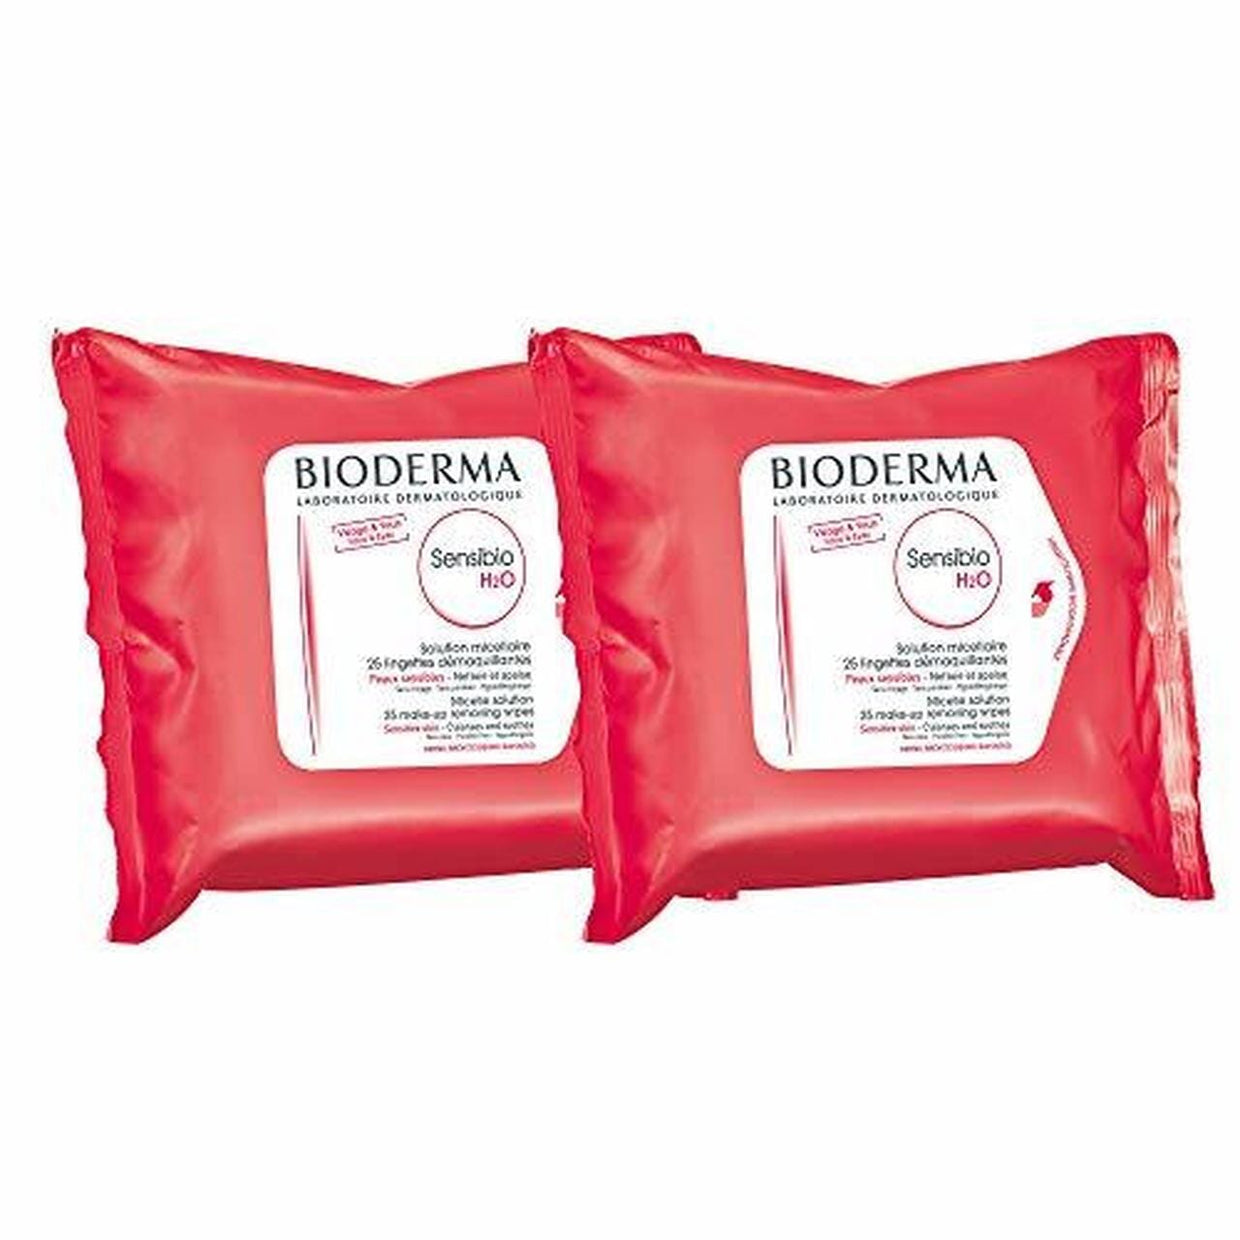 Bioderma Sensibio H2O Wipes Bioderma 2x25 Wipes Shop at Exclusive Beauty Club